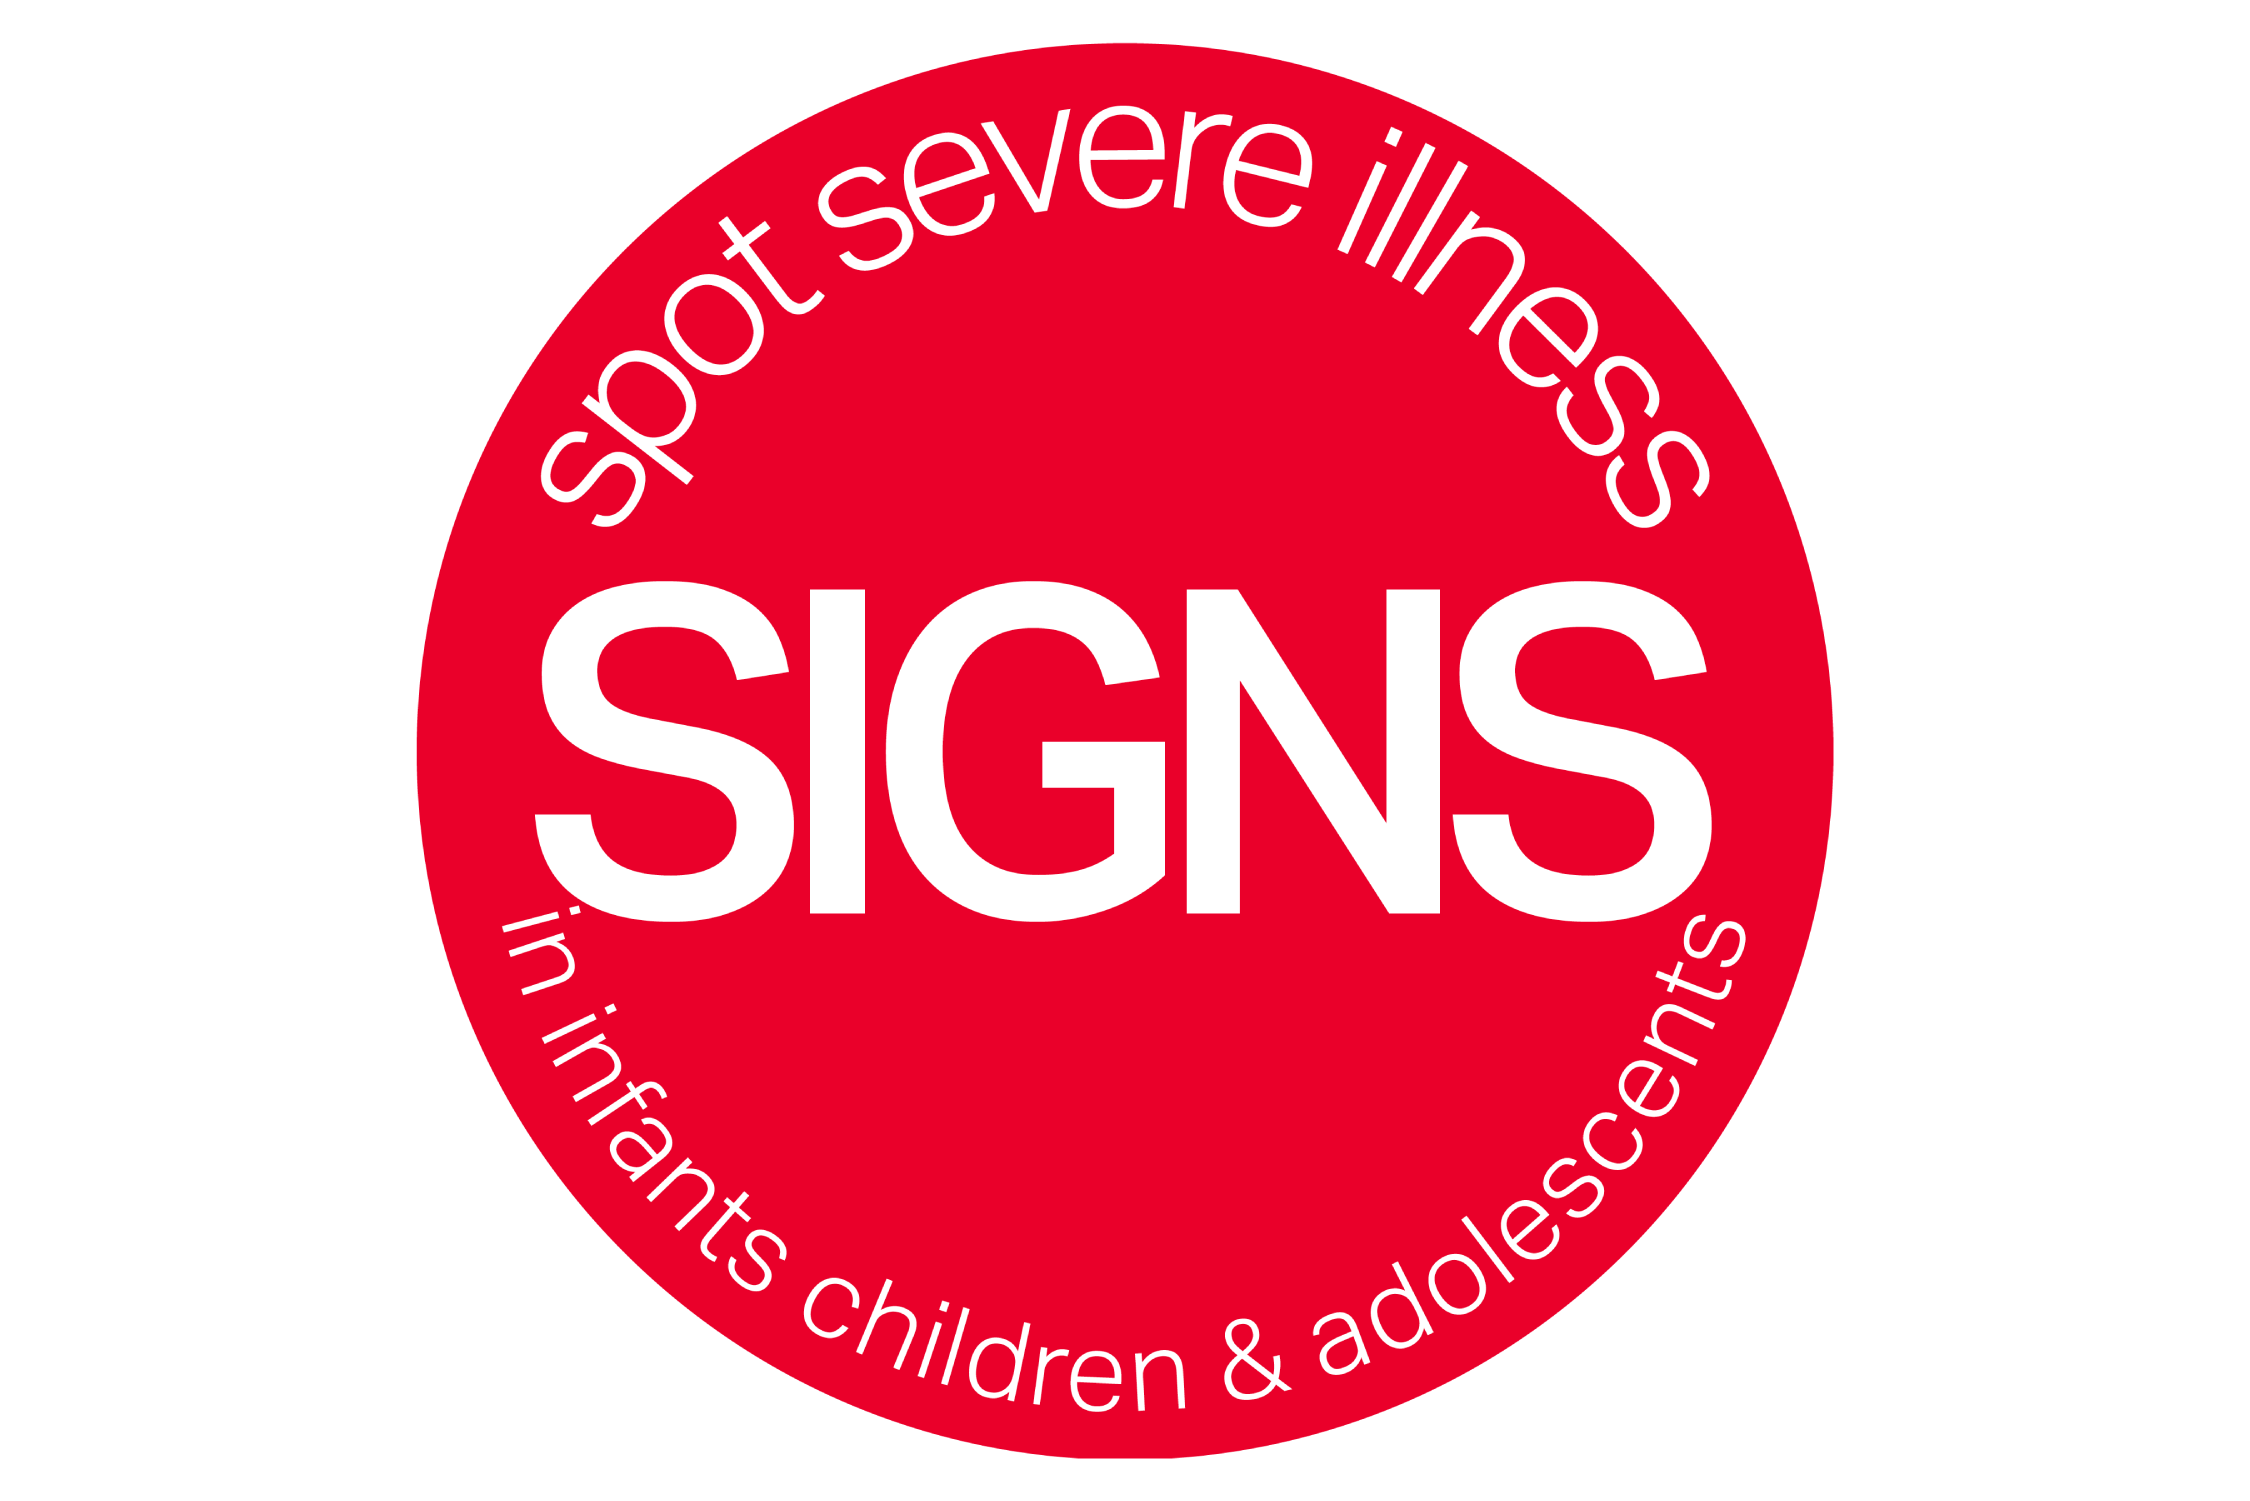 spot severe illness in infants children & adolescents